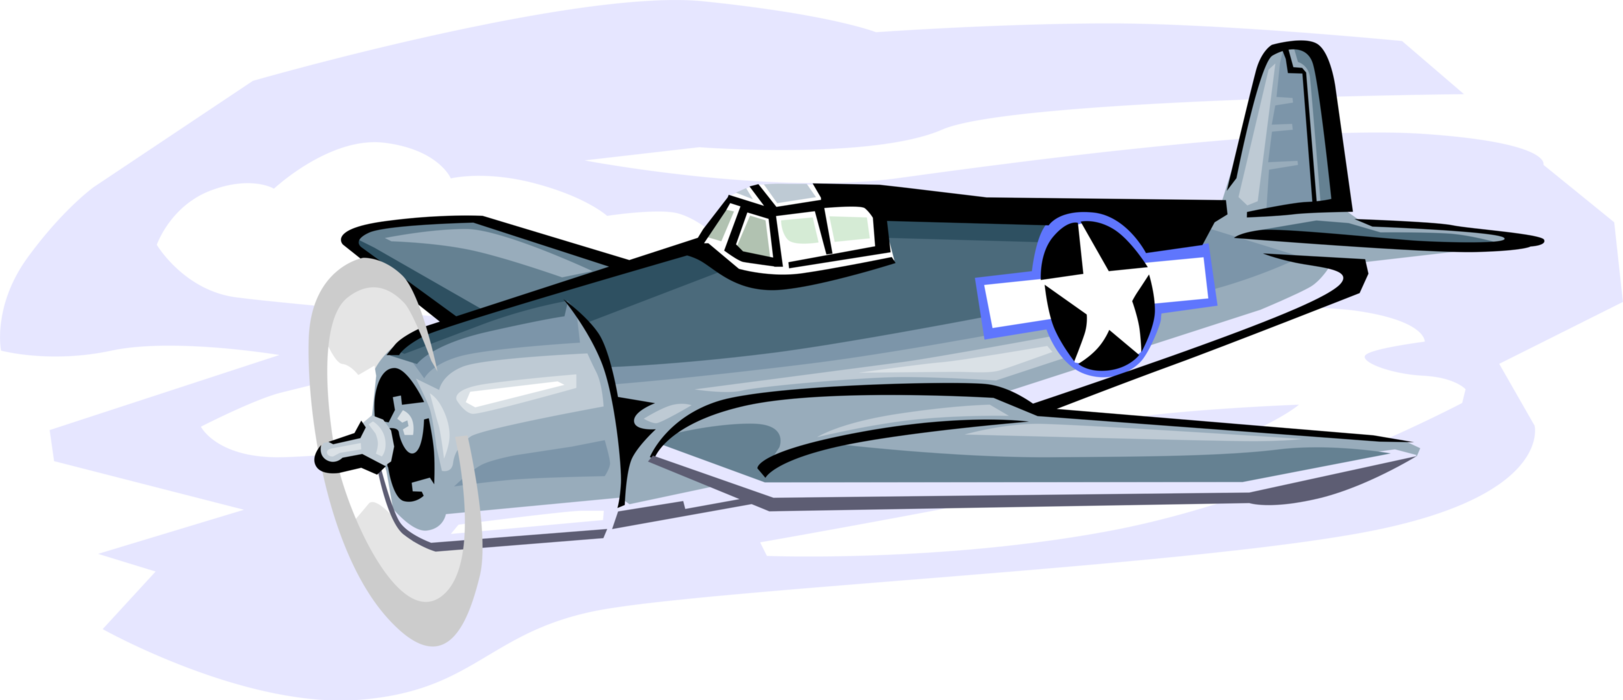 Vector Illustration of Second World War United States Navy USN Grumman F4F Wildcat Carrier-Based Fighter Aircraft